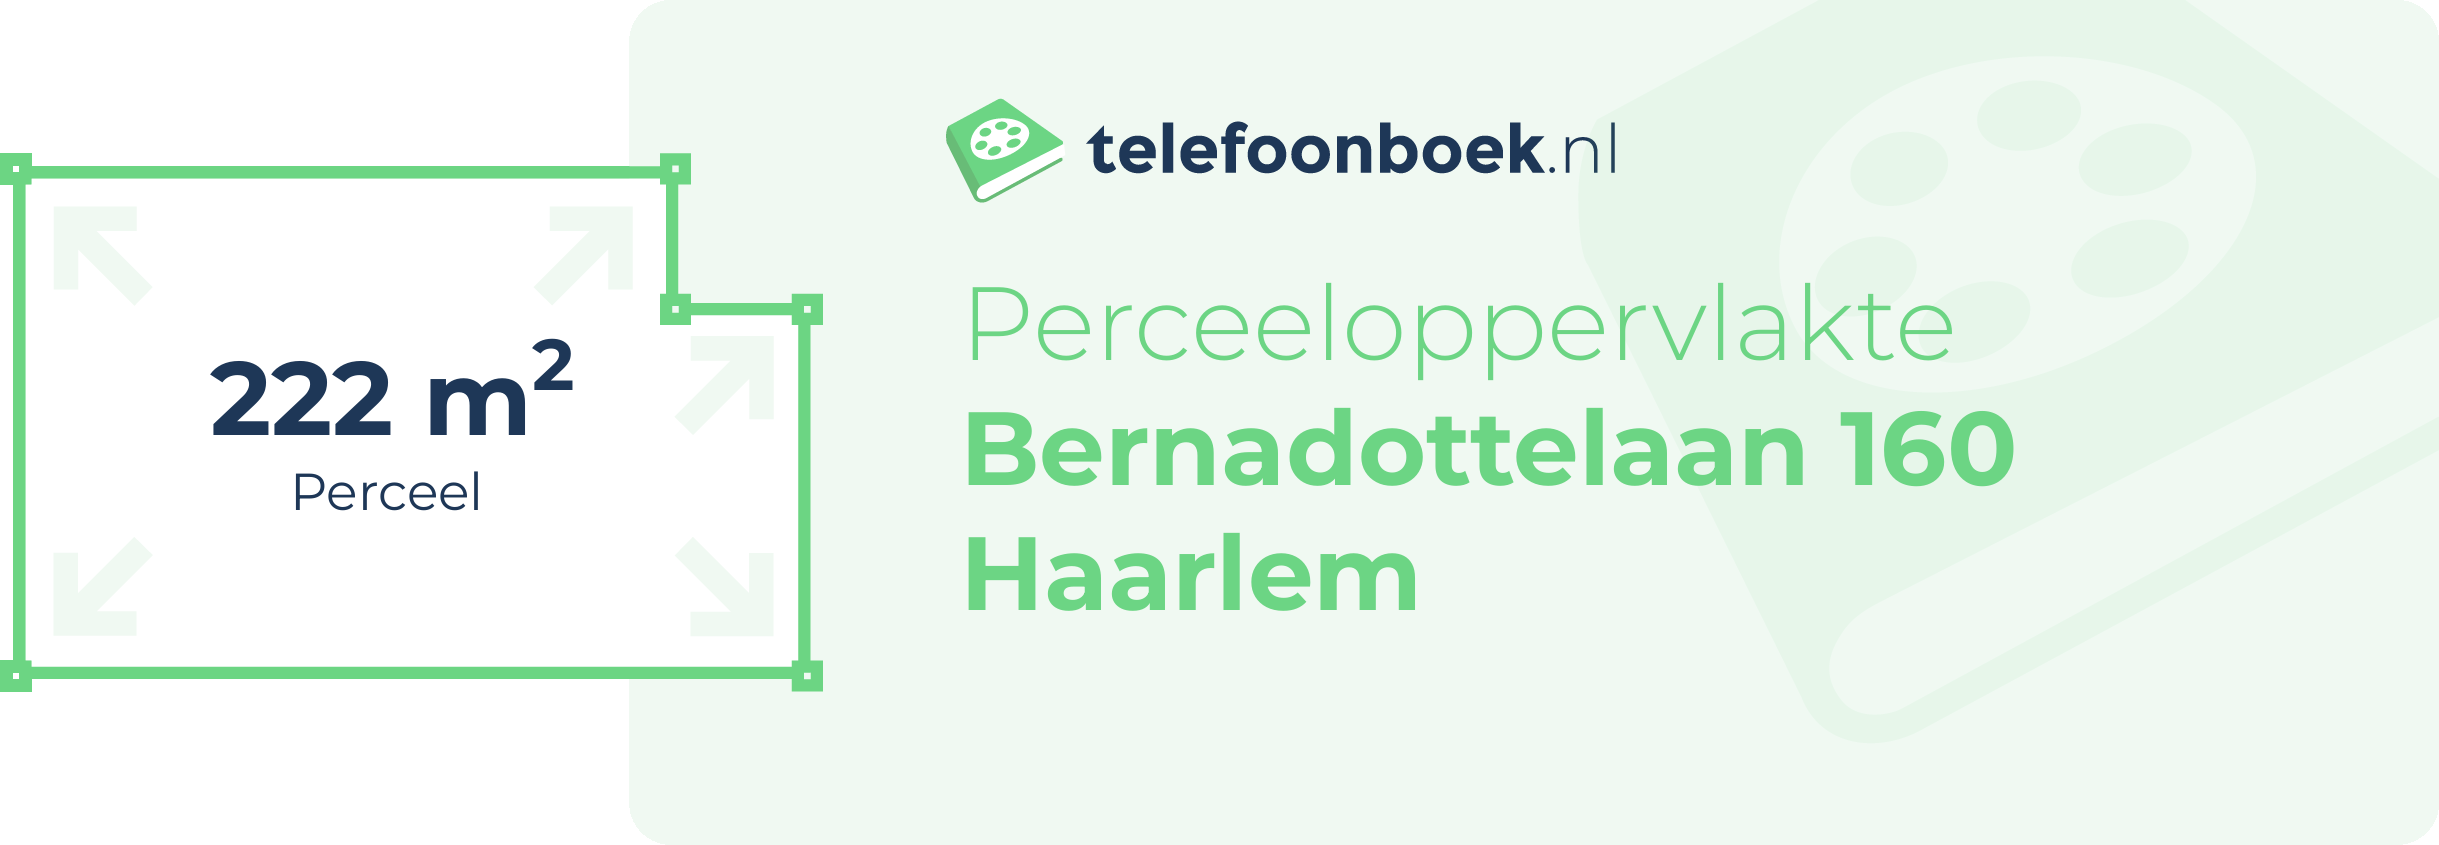 Perceeloppervlakte Bernadottelaan 160 Haarlem